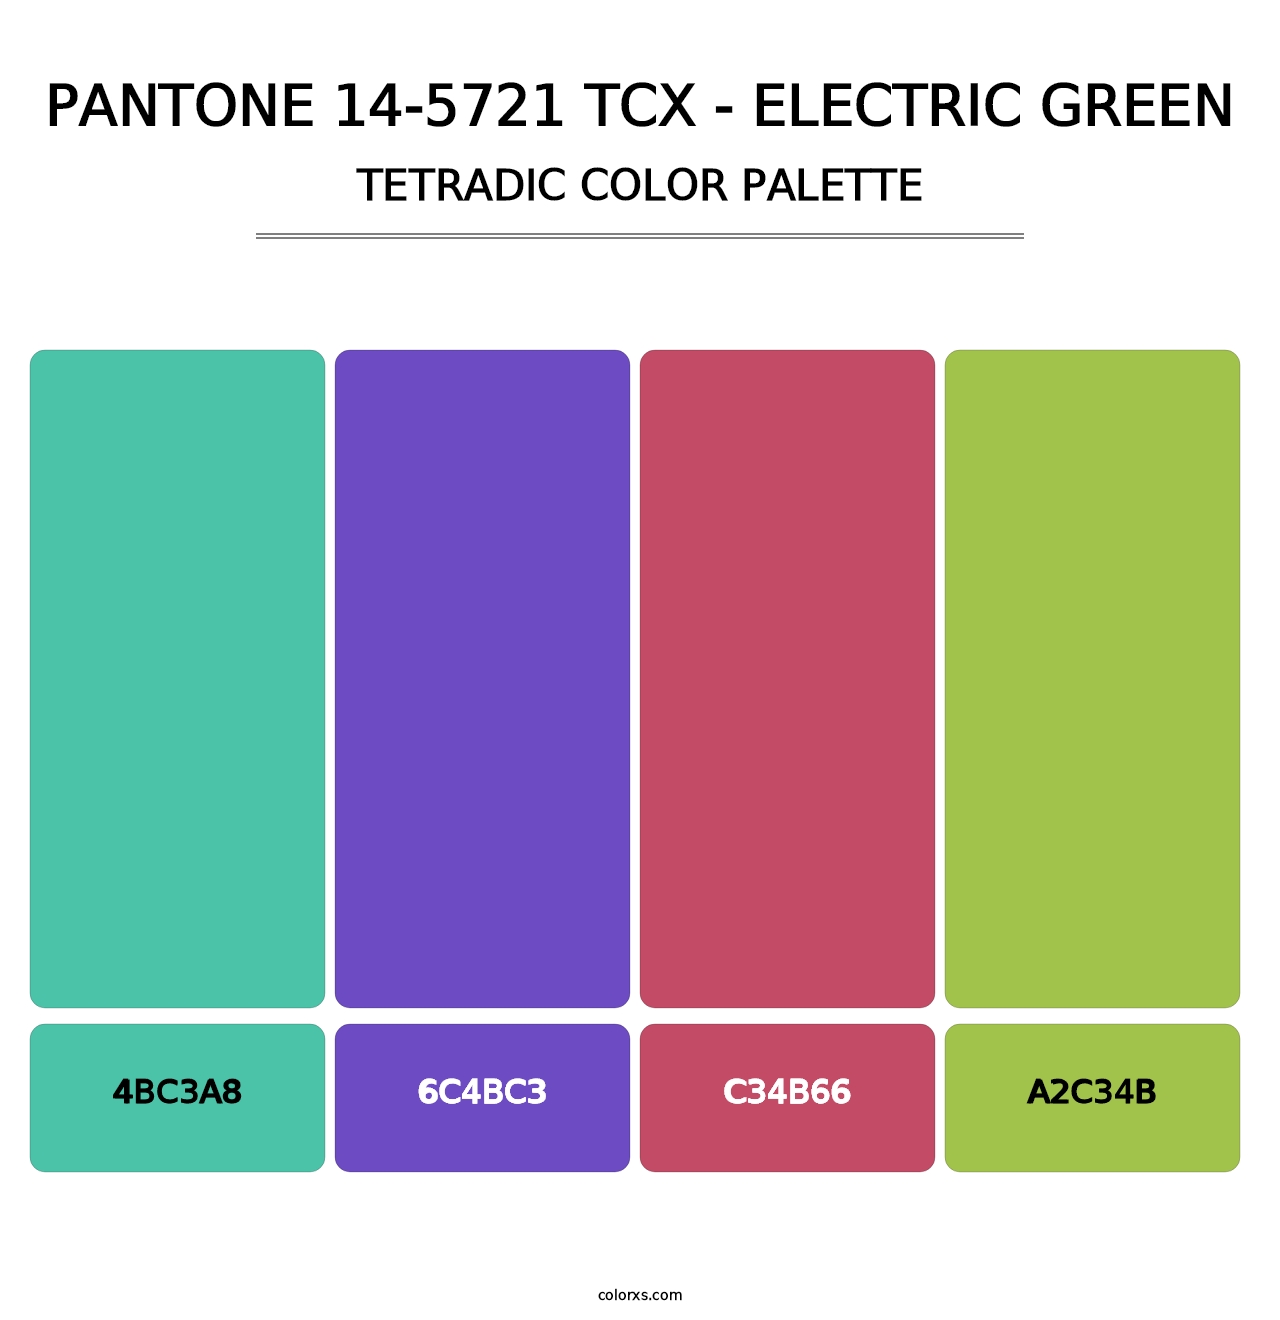 PANTONE 14-5721 TCX - Electric Green - Tetradic Color Palette